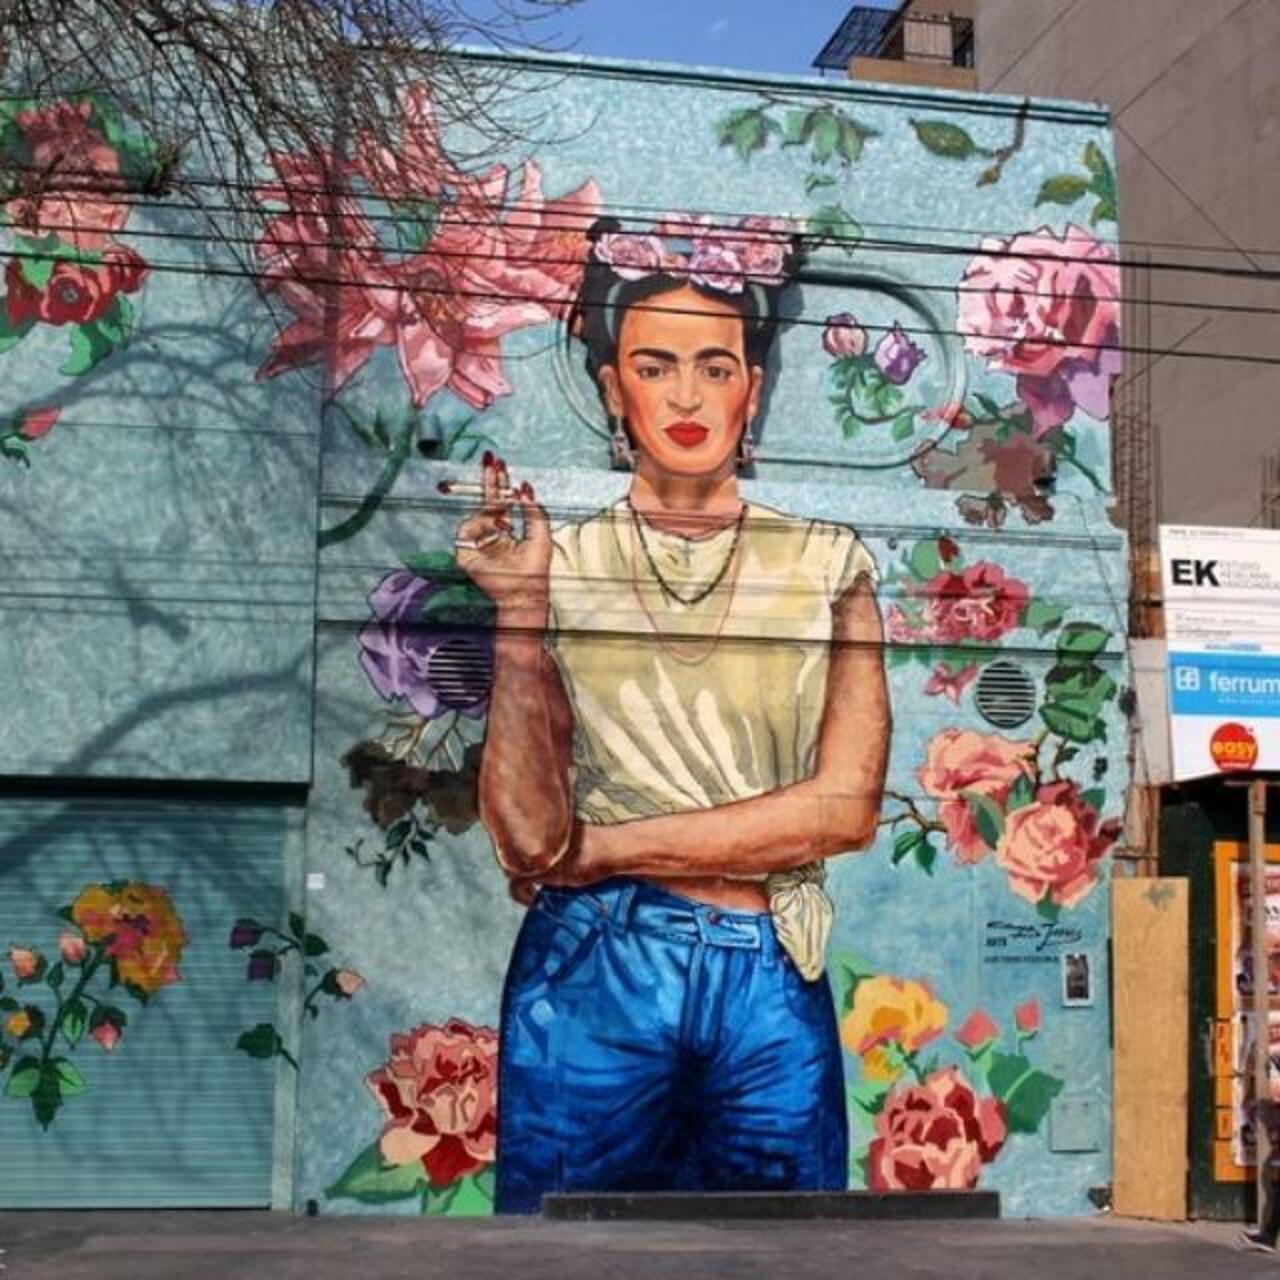 Retweeted Sonia (@chonisalv):

#graffiti #streetart #Argentina #FridaKahlo https://t.co/38wzvEZuSJ http://fb.me/1UvoY2eVi